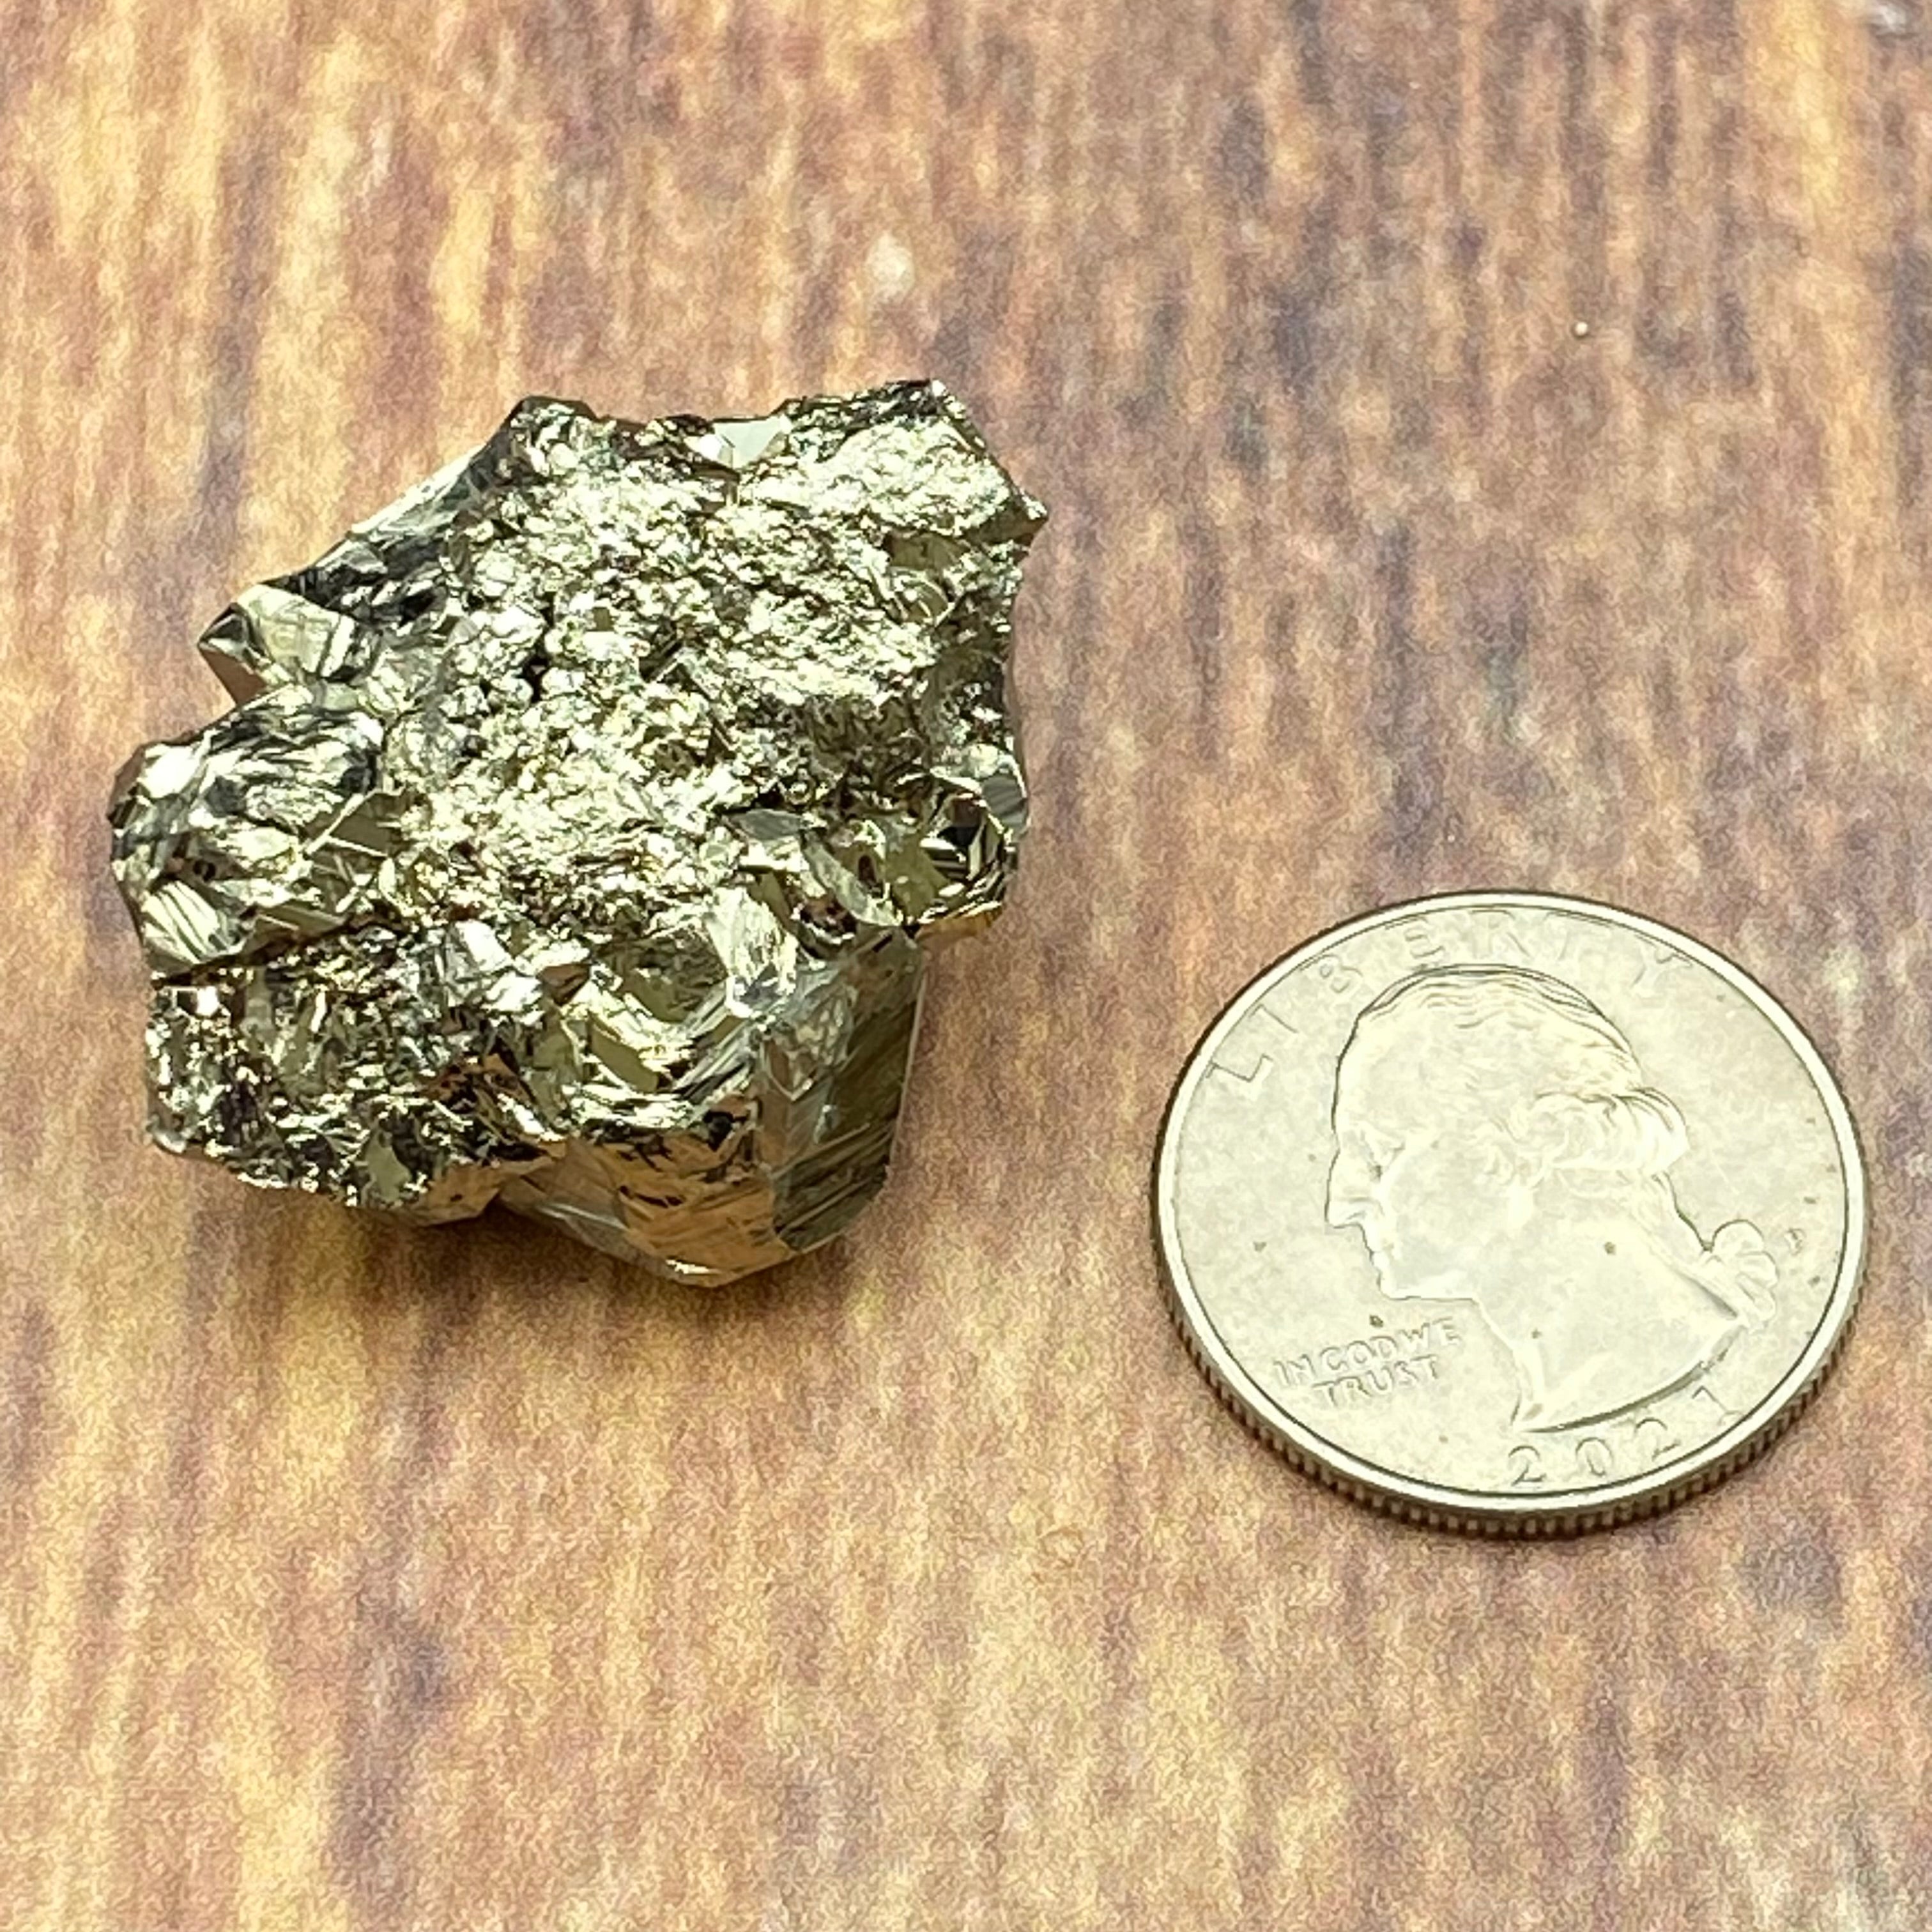 Peruvian Pyrite Crystal - 153